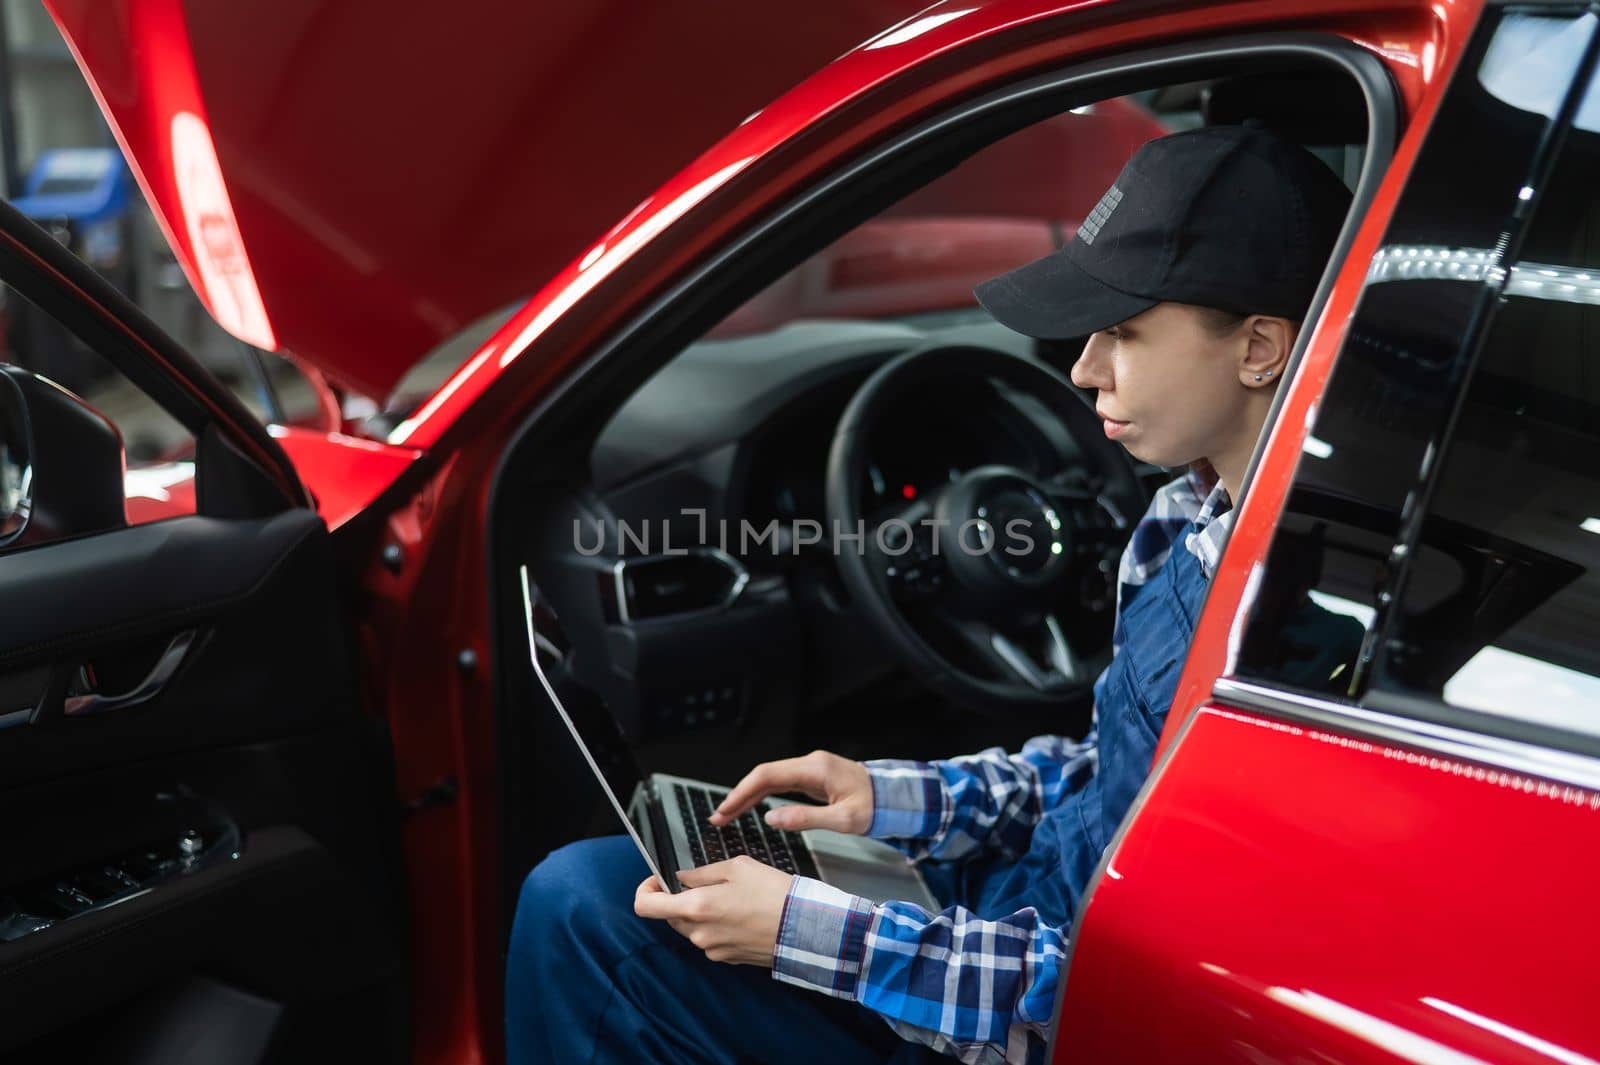 Woman auto mechanic doing diagnostics in car using laptop